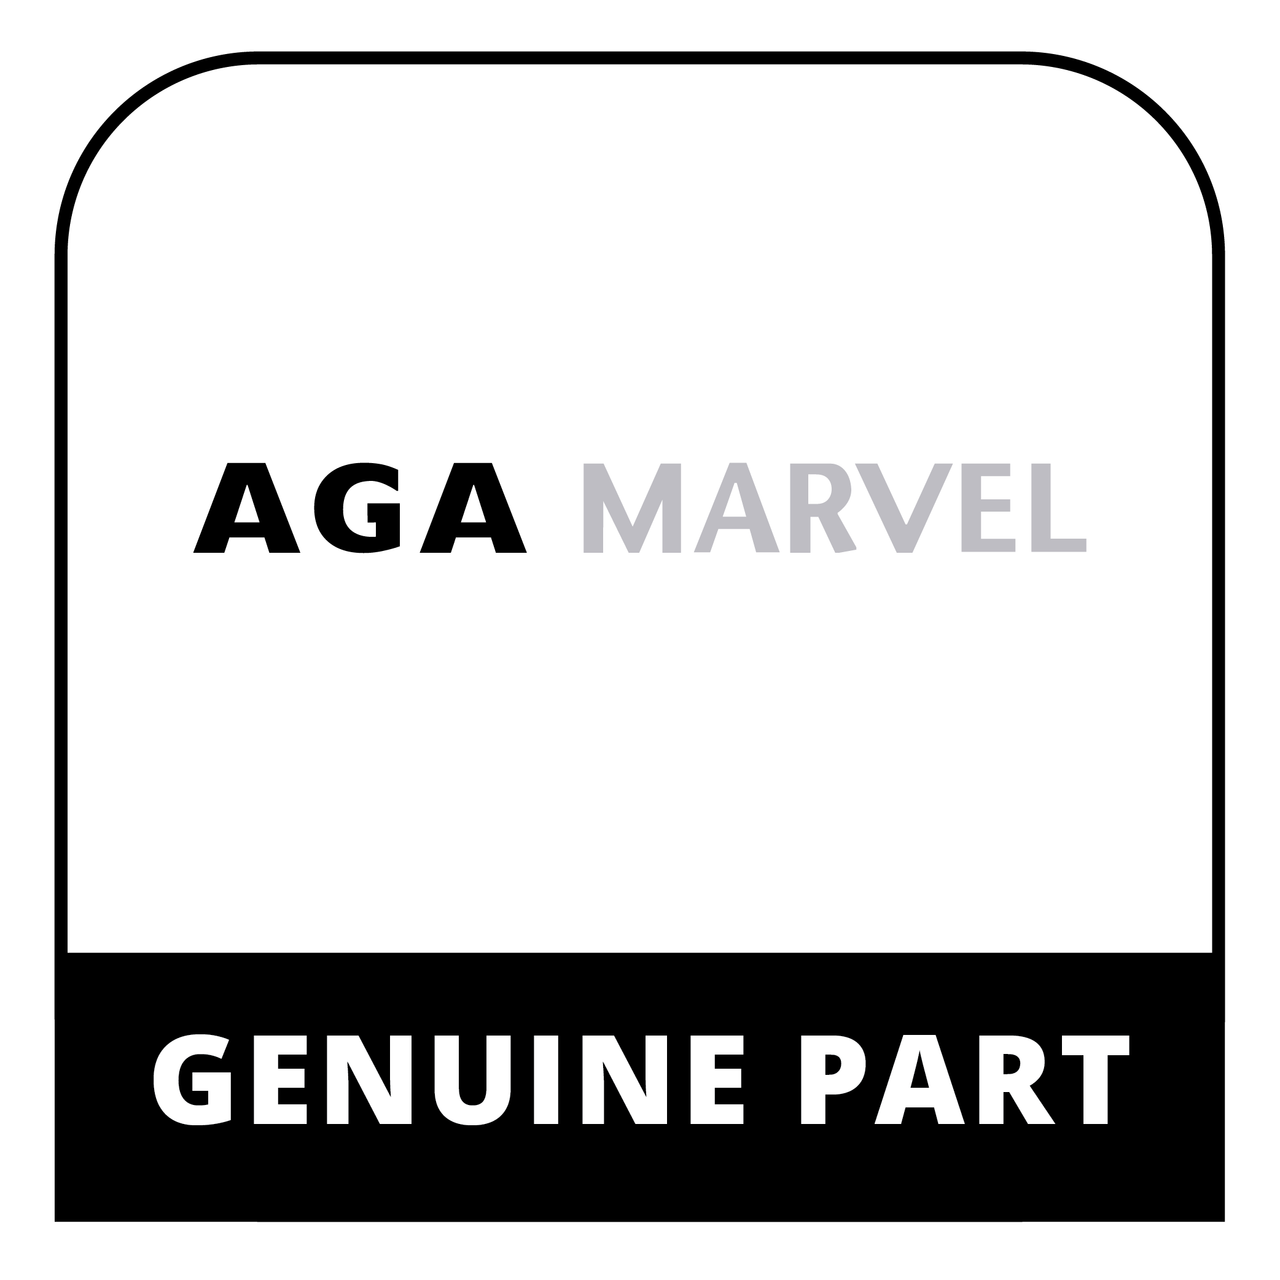 AGA Marvel RO4M998665 - Blr Rear Disc Bfd01012/001 - Genuine AGA Marvel Part